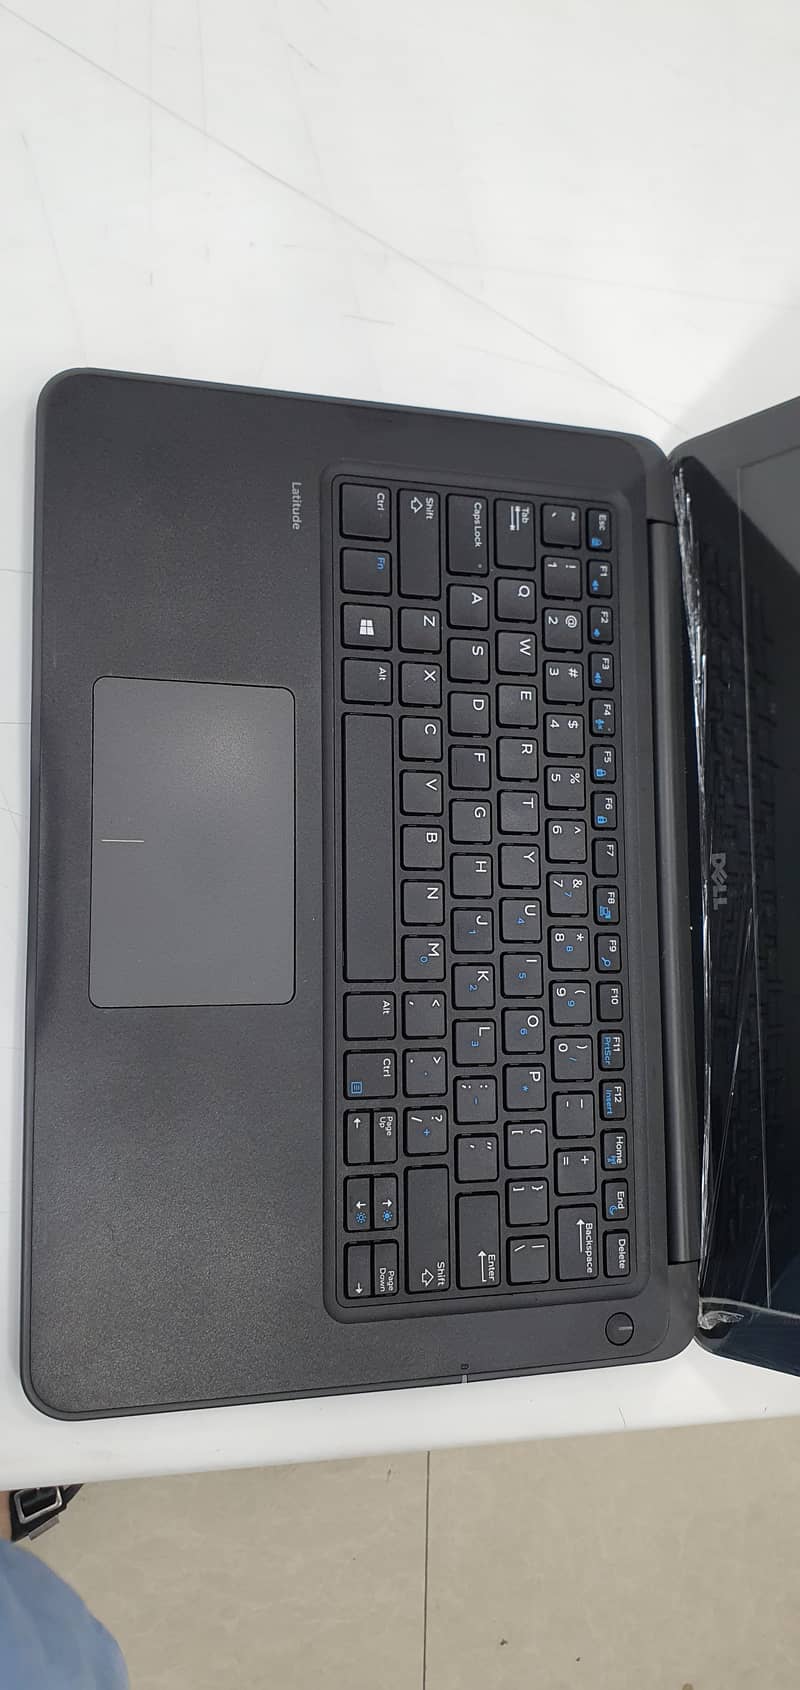 Dell latitude 3380 6th gen Laptop for sale 10